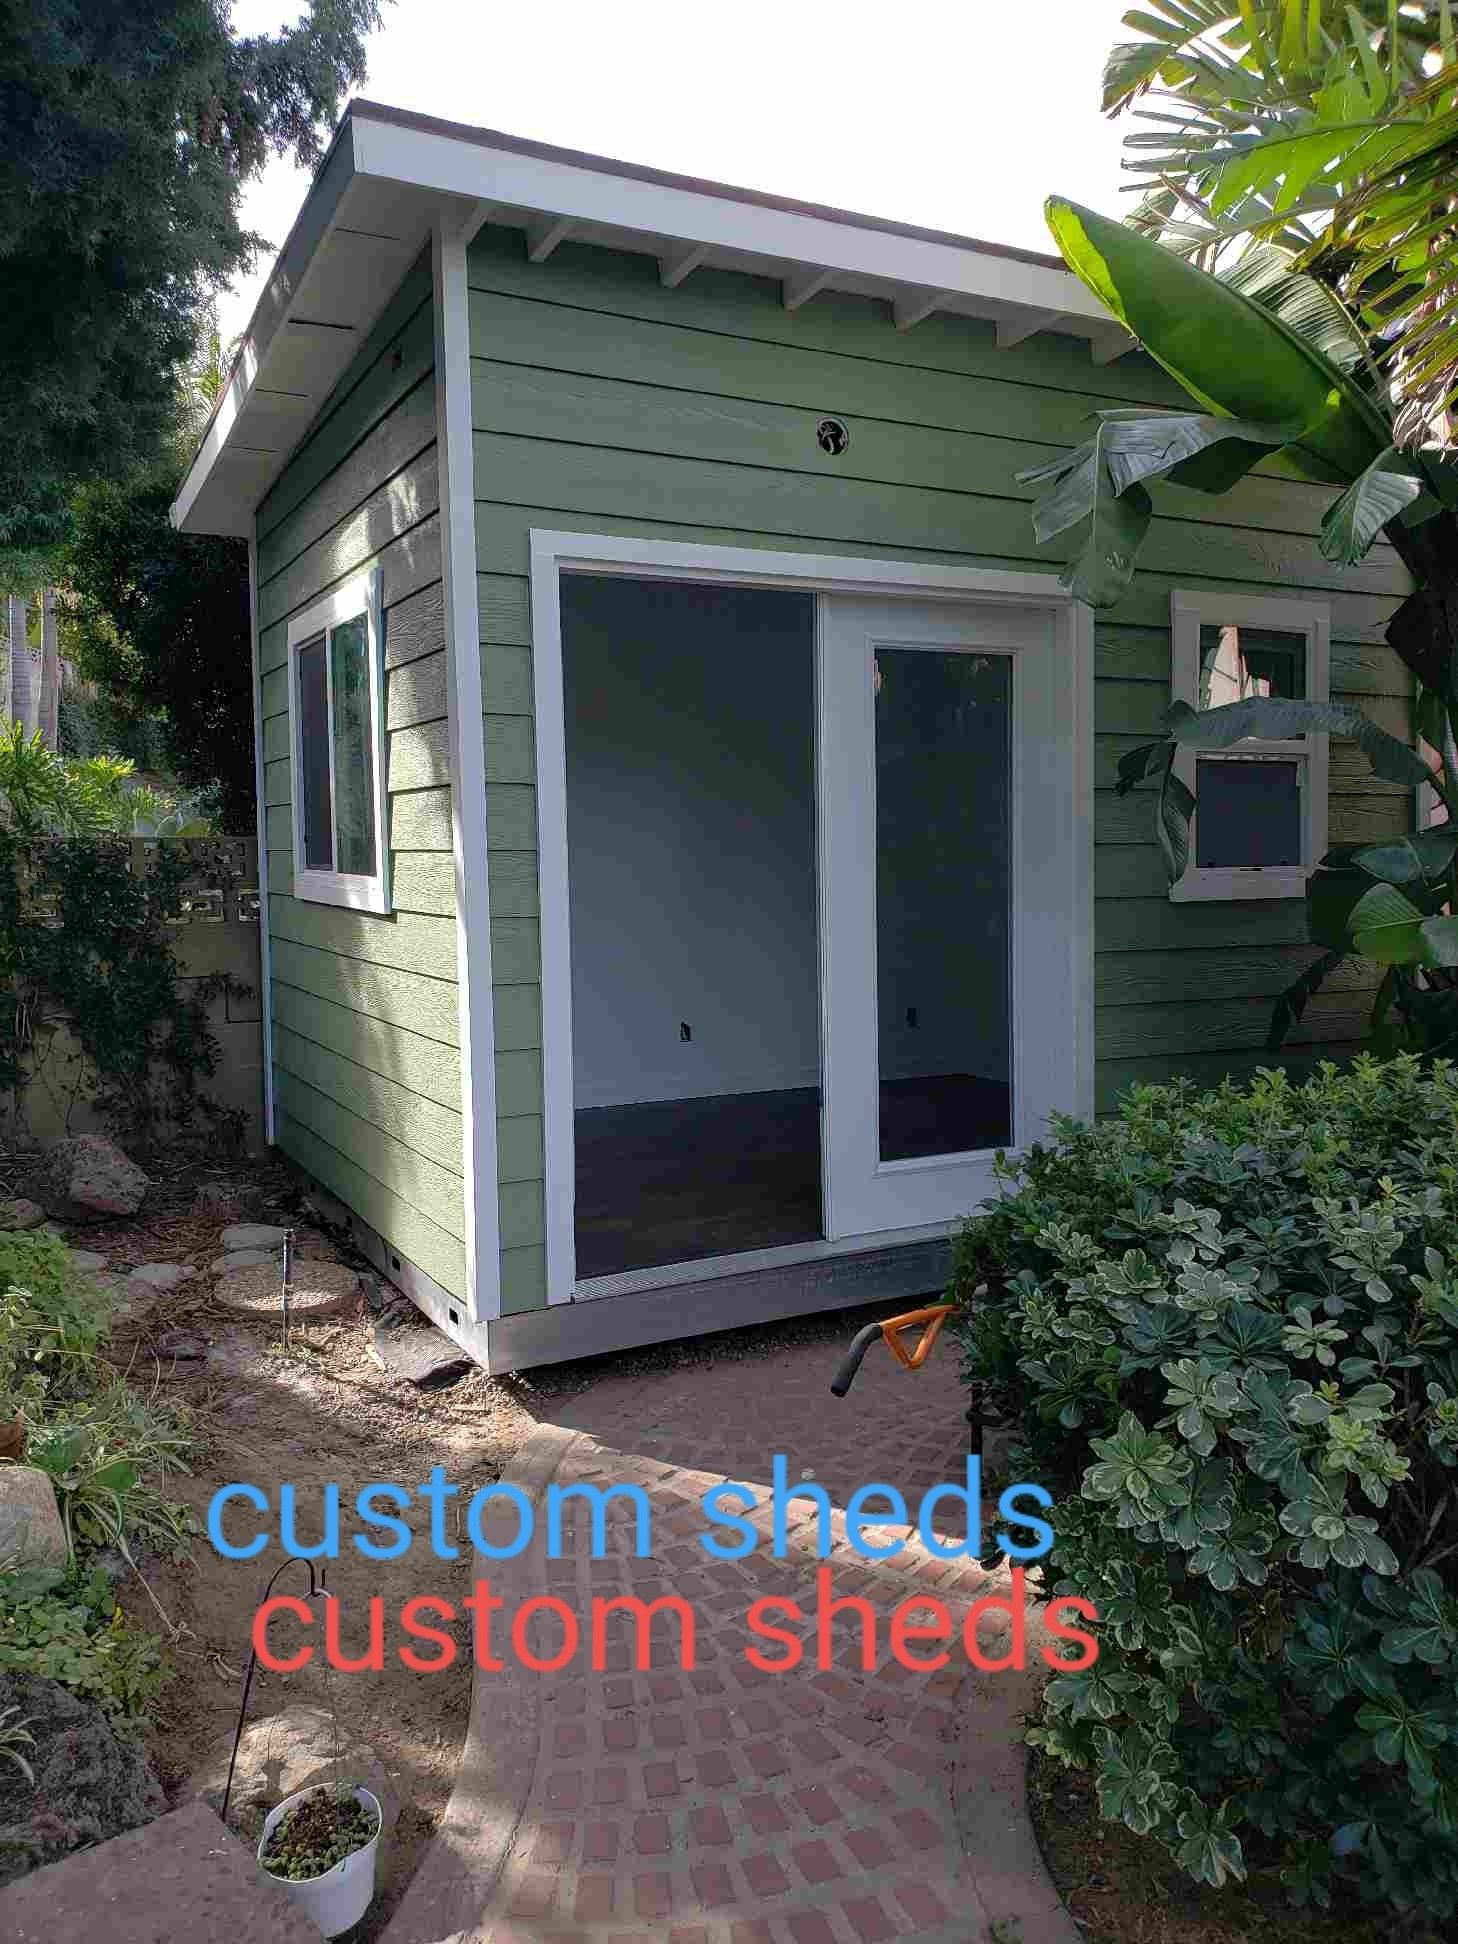 Custom sheds